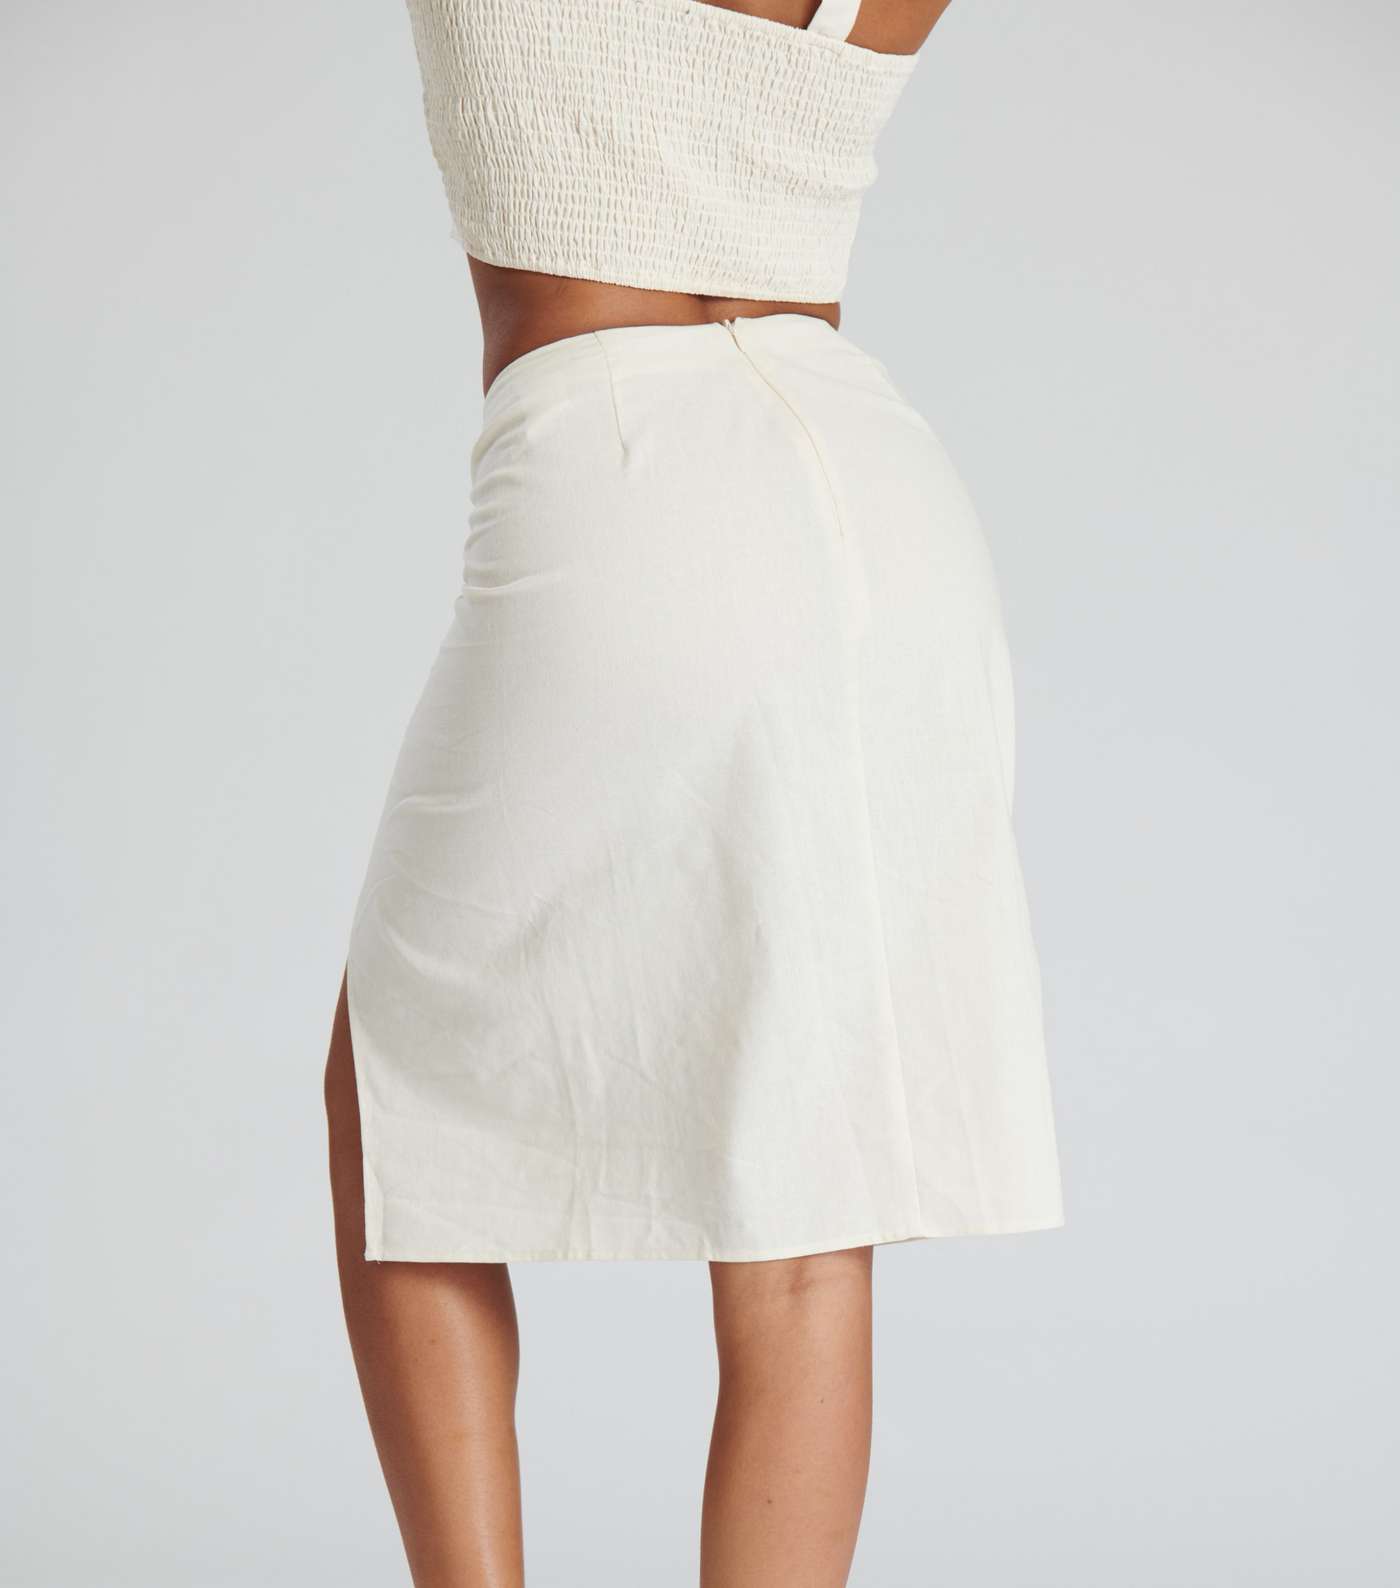 South Beach Cream Linen-Look Knot Midi Skirt Image 4